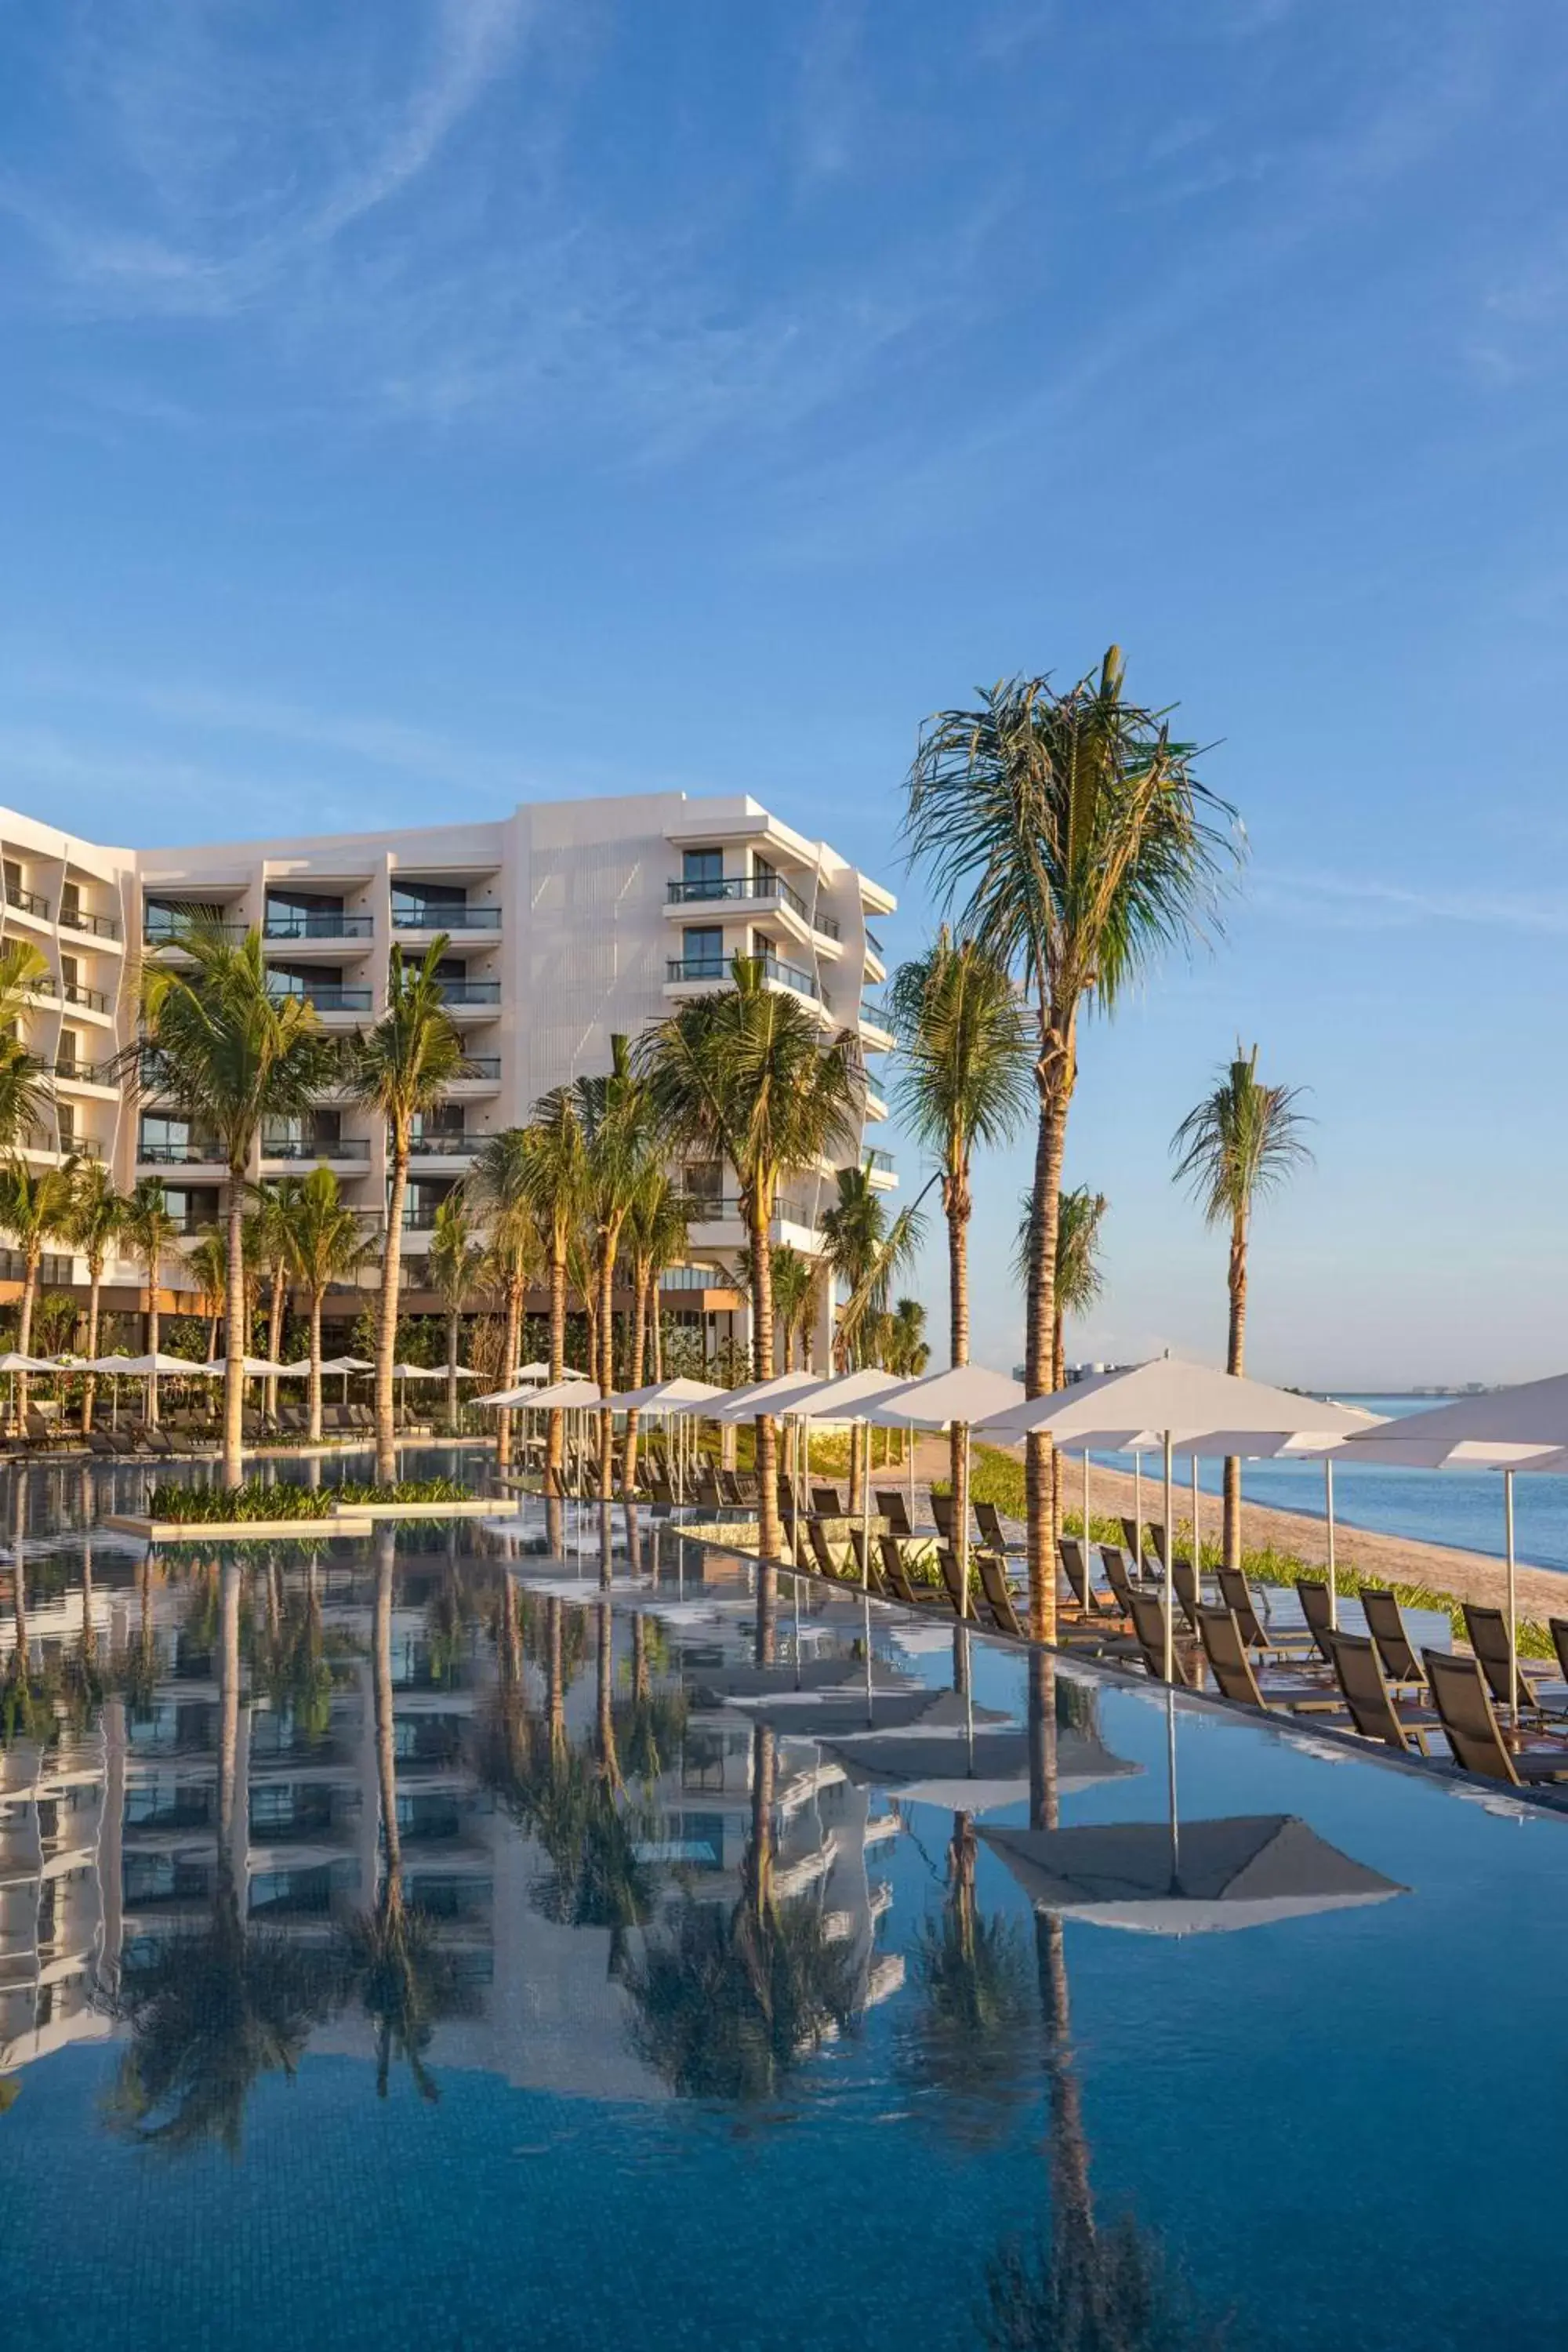 Swimming Pool in Hilton Cancun, an All-Inclusive Resort